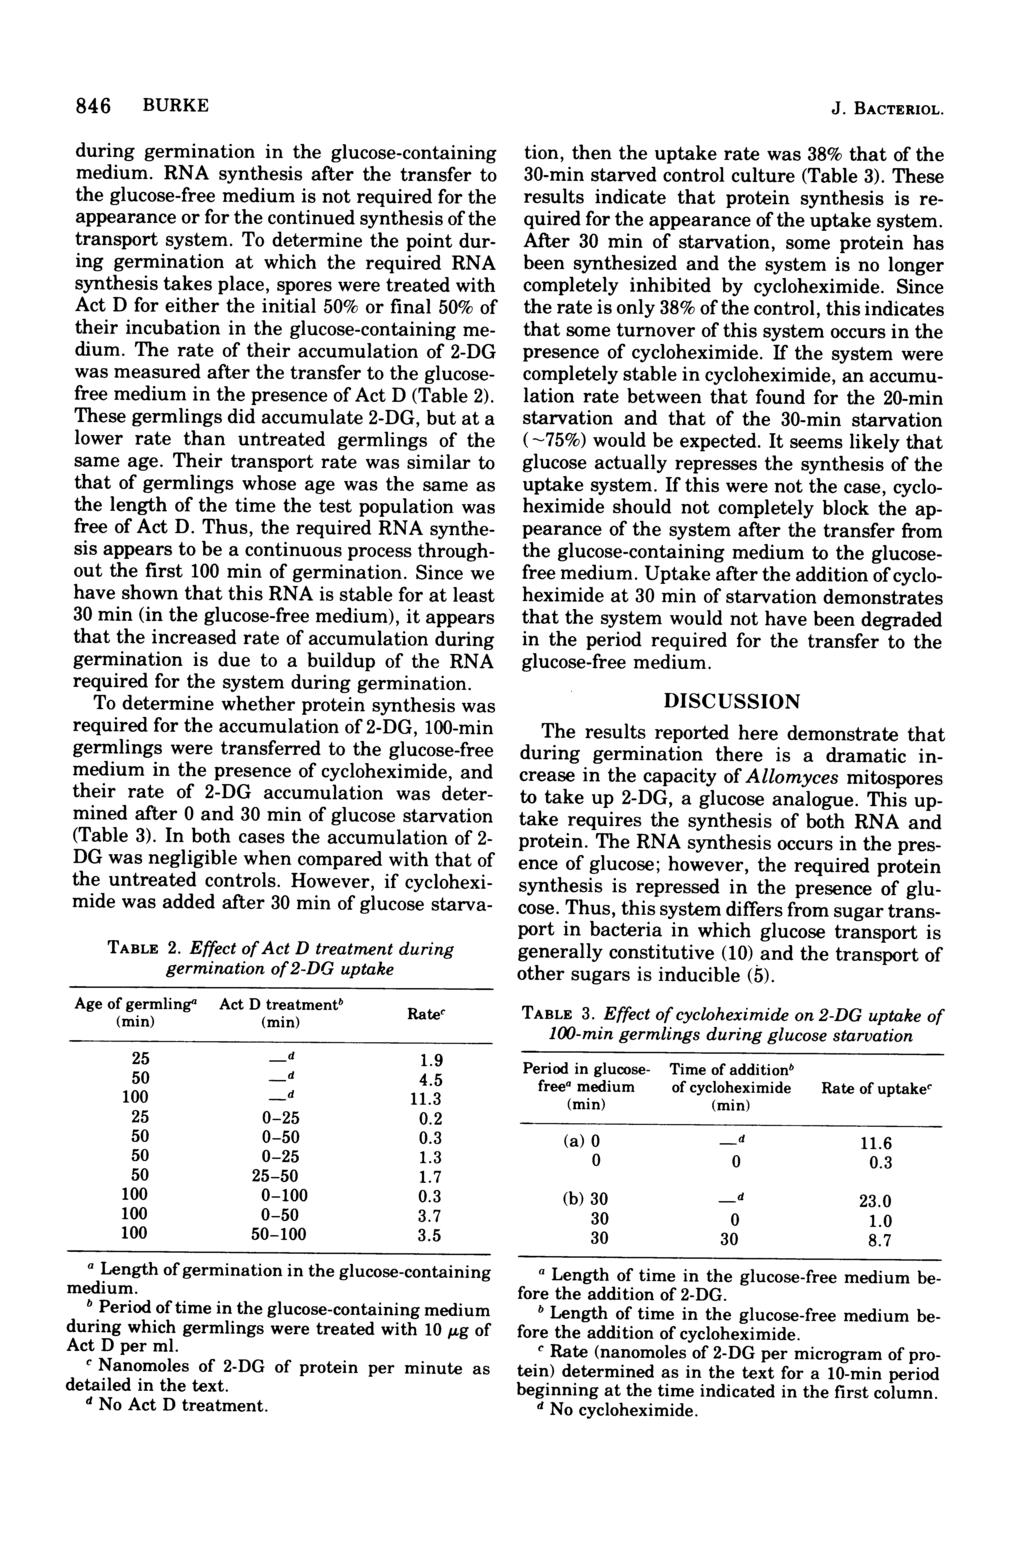 846 BURKE during germination in the glucose-containing medium.